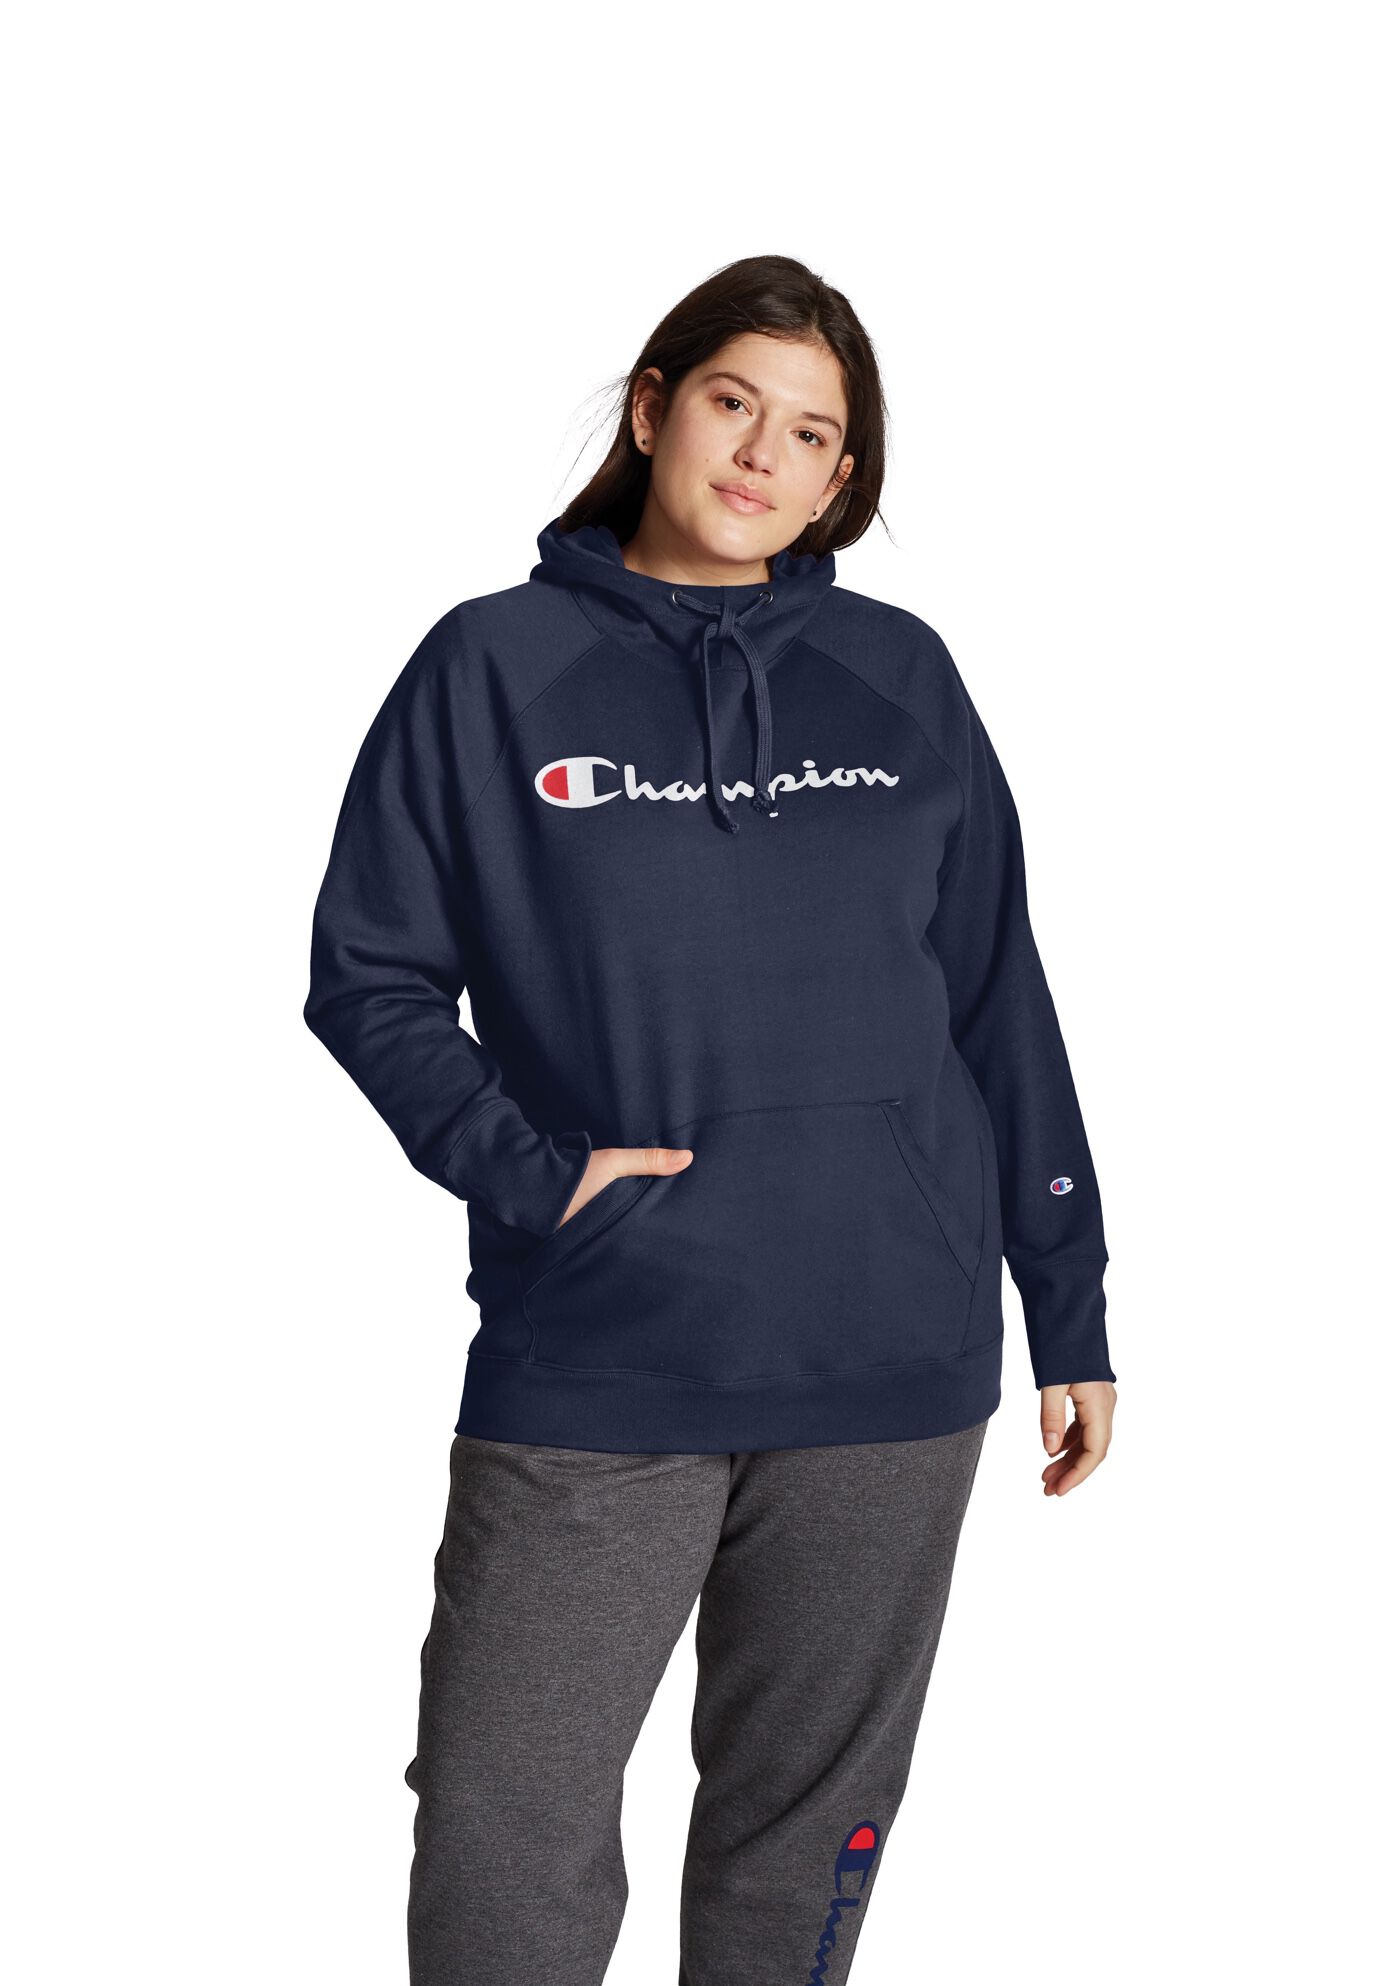 Plus Size Women's Champion Women's Plus Powerblend® Fleece Hoodie, Script Logo by Champion in Athletic Navy (Size 4X)